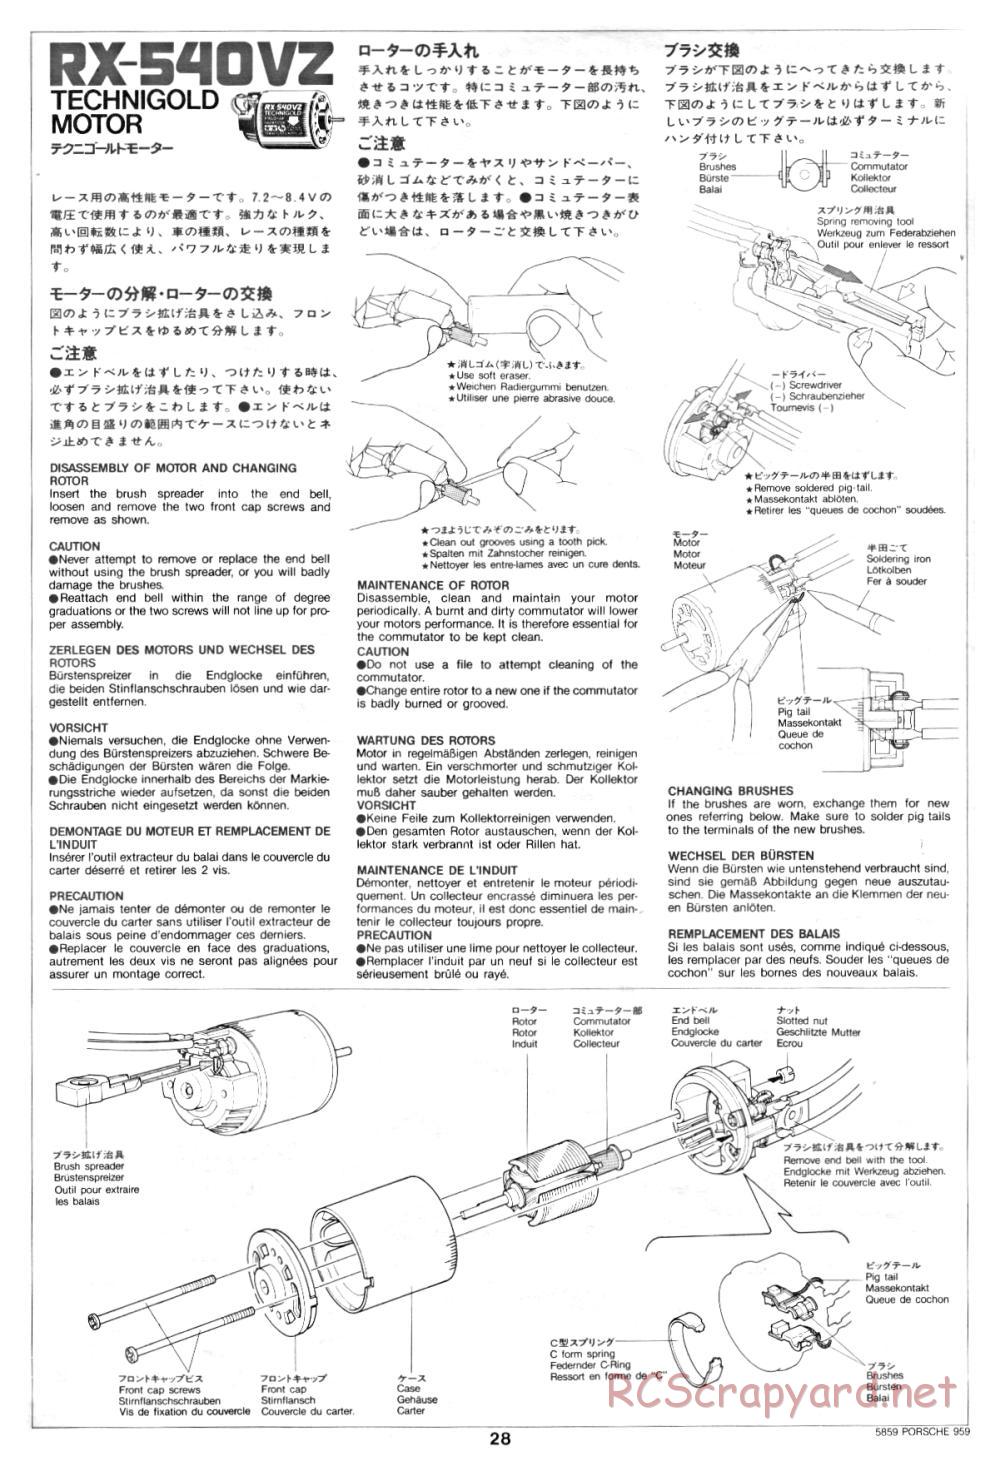 Tamiya - Porsche 959 - 58059 - Manual - Page 28